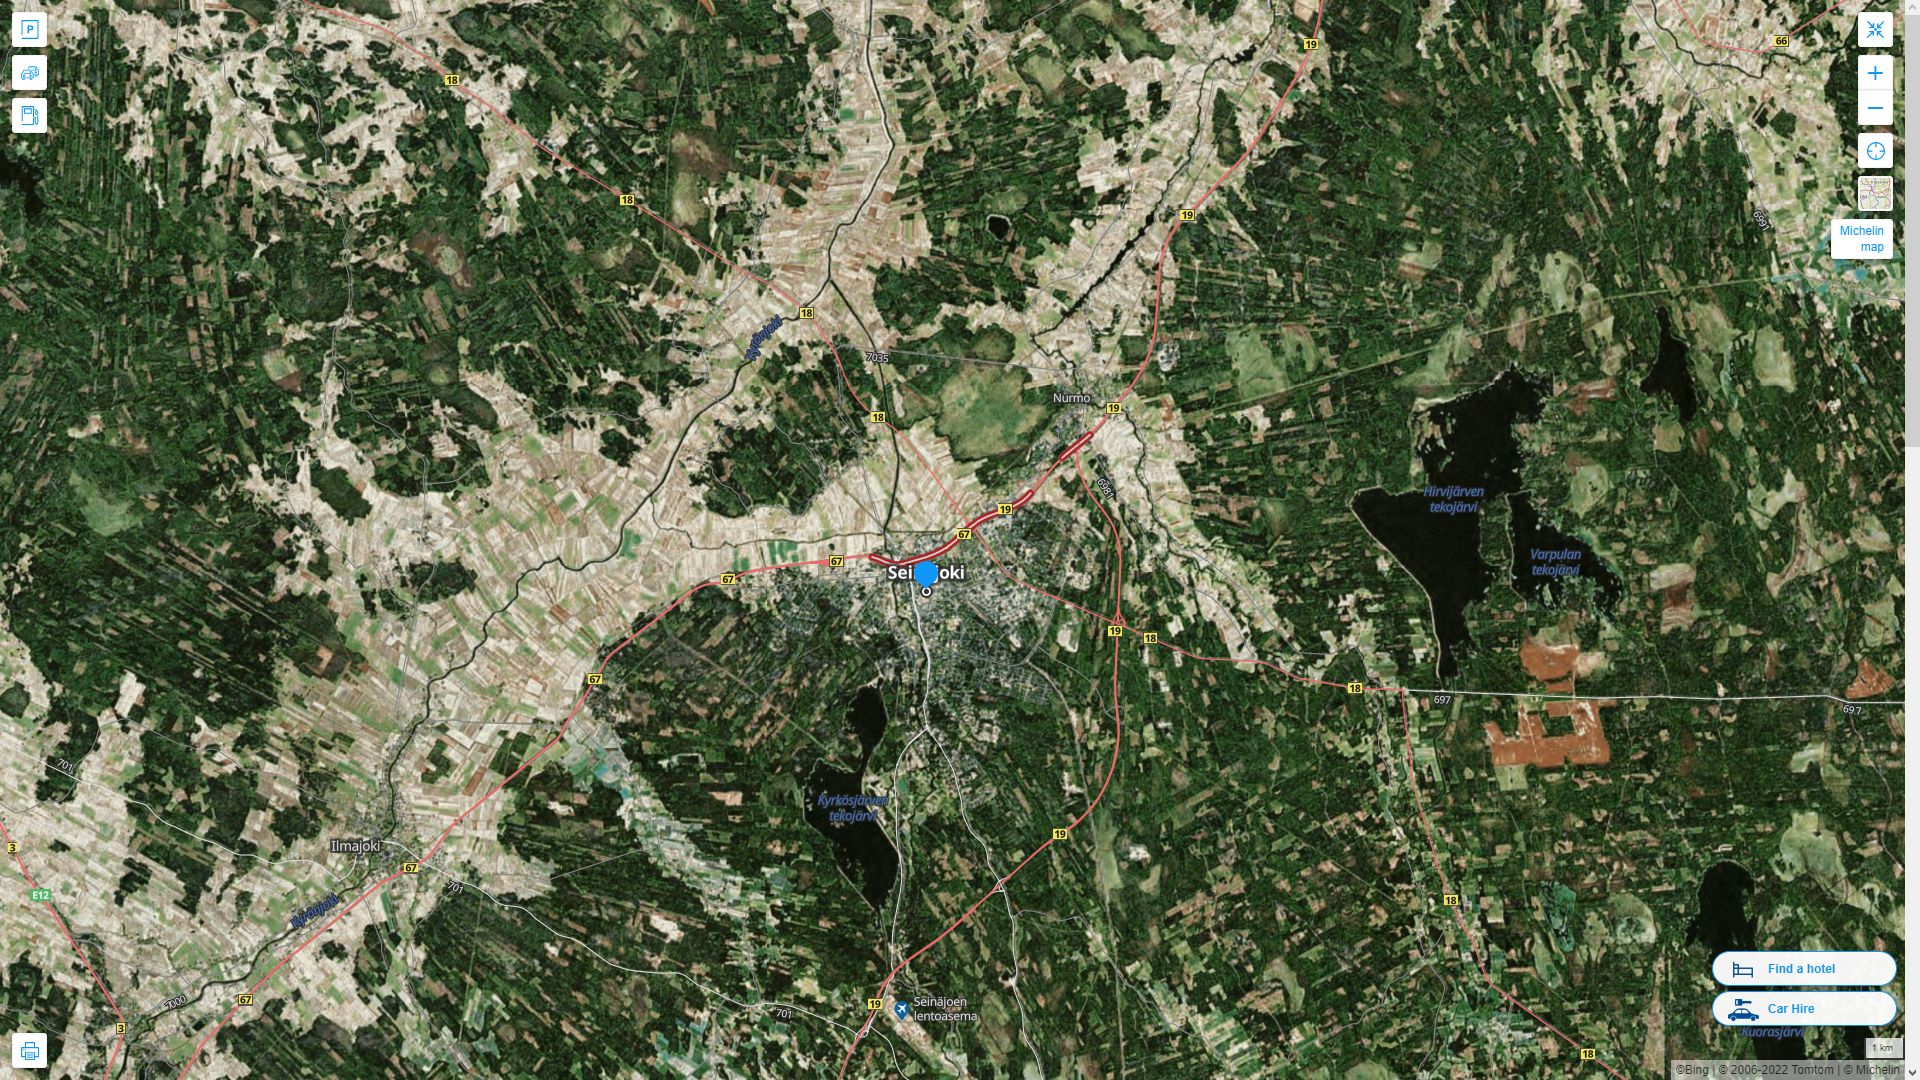 Seinajoki Finlande Autoroute et carte routiere avec vue satellite